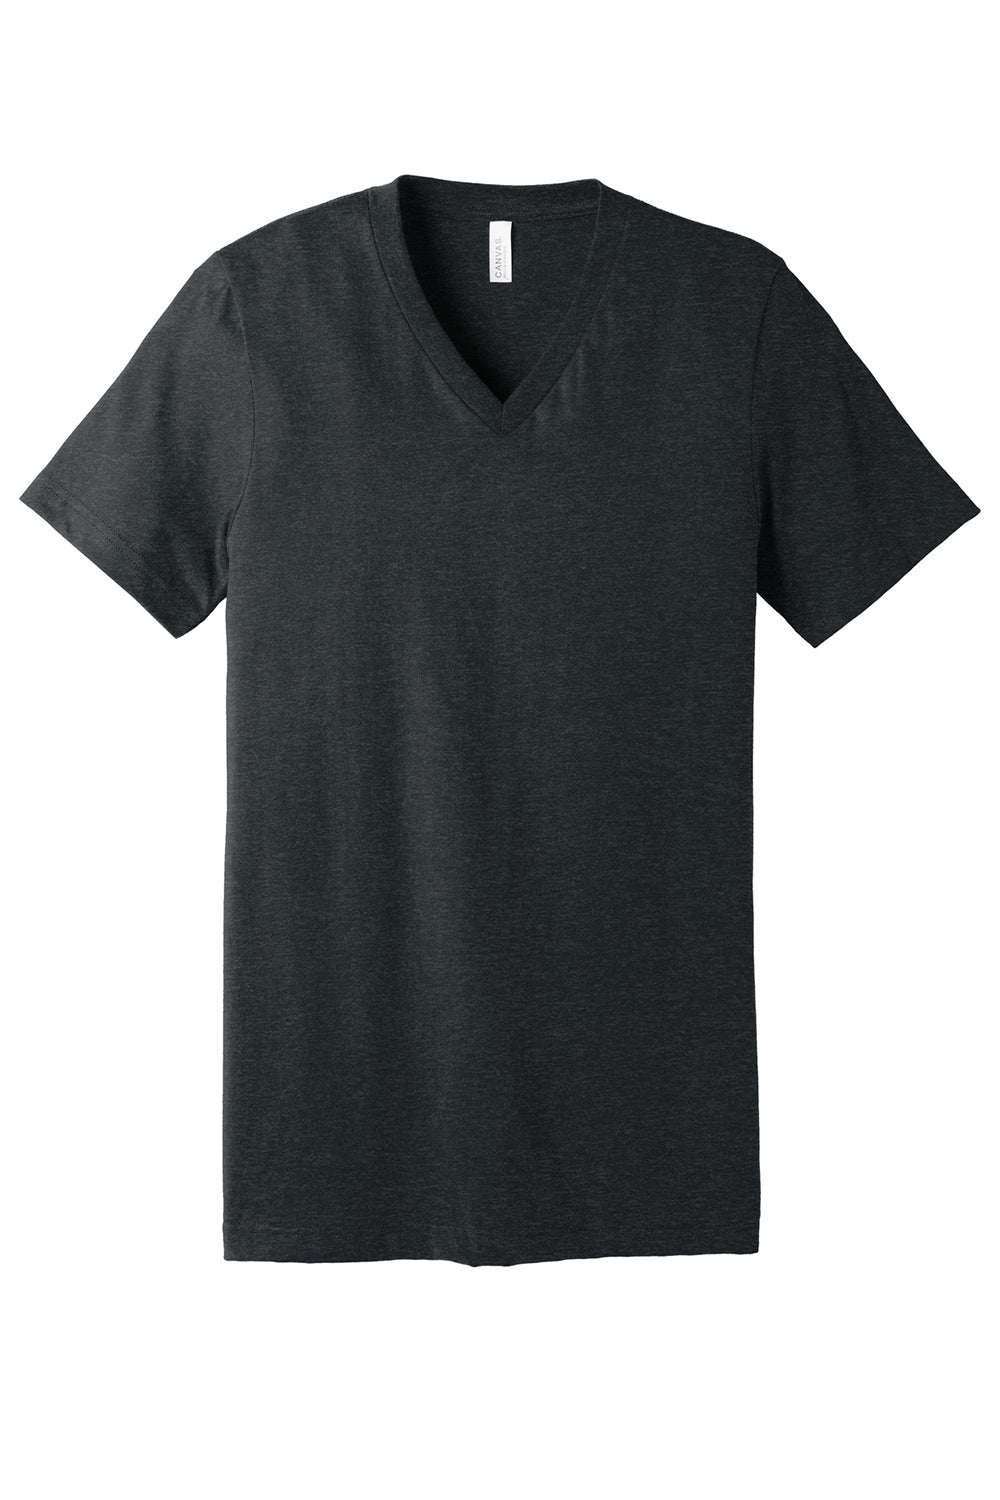 Bella + Canvas BC3005CVC Mens CVC Short Sleeve V-Neck T-Shirt Heather Dark Grey Flat Front